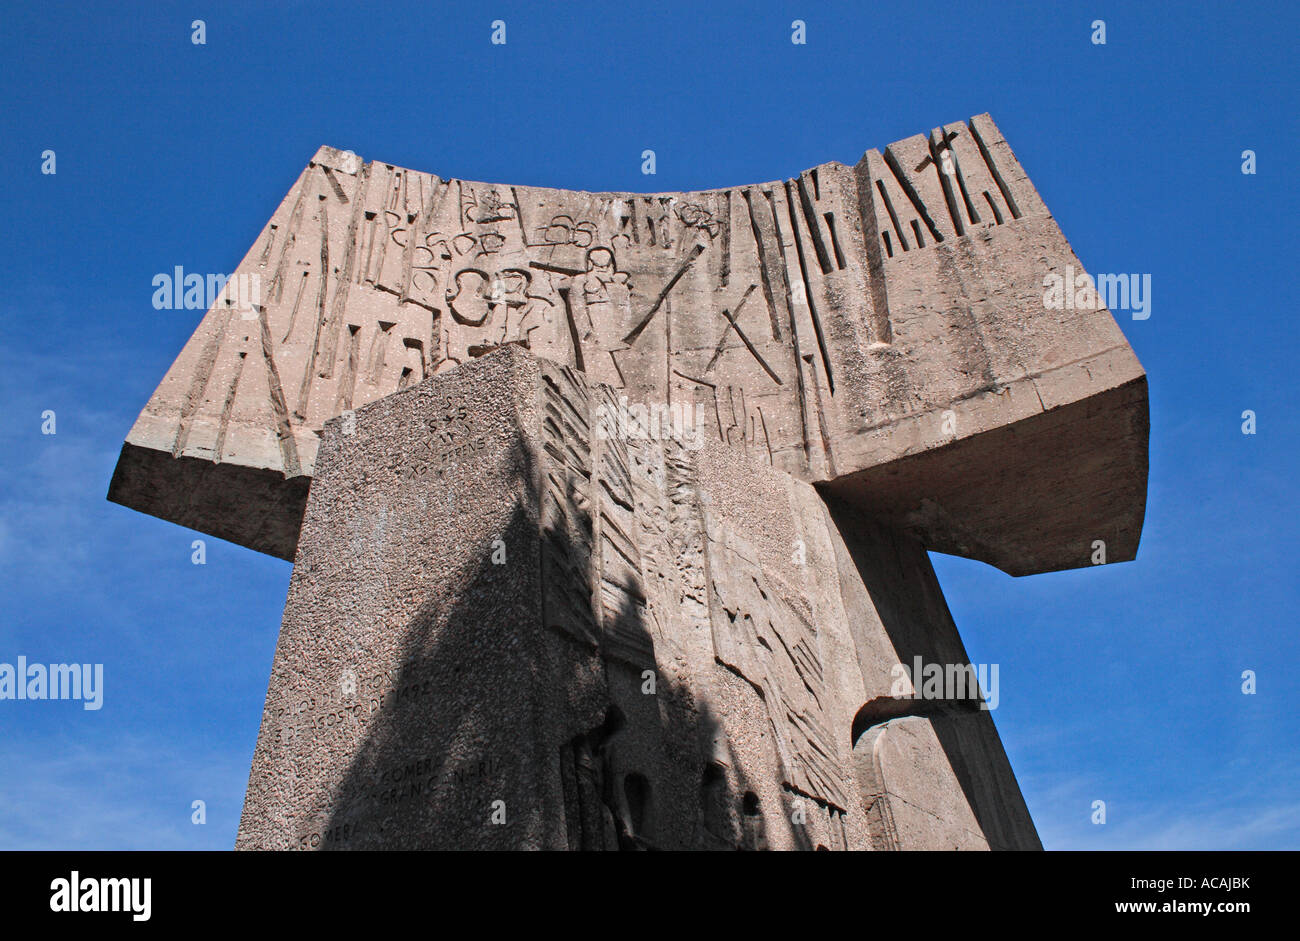 Monumento al Descubrimiento, Plaza de Colon, Madrid, Spain Stock Photo